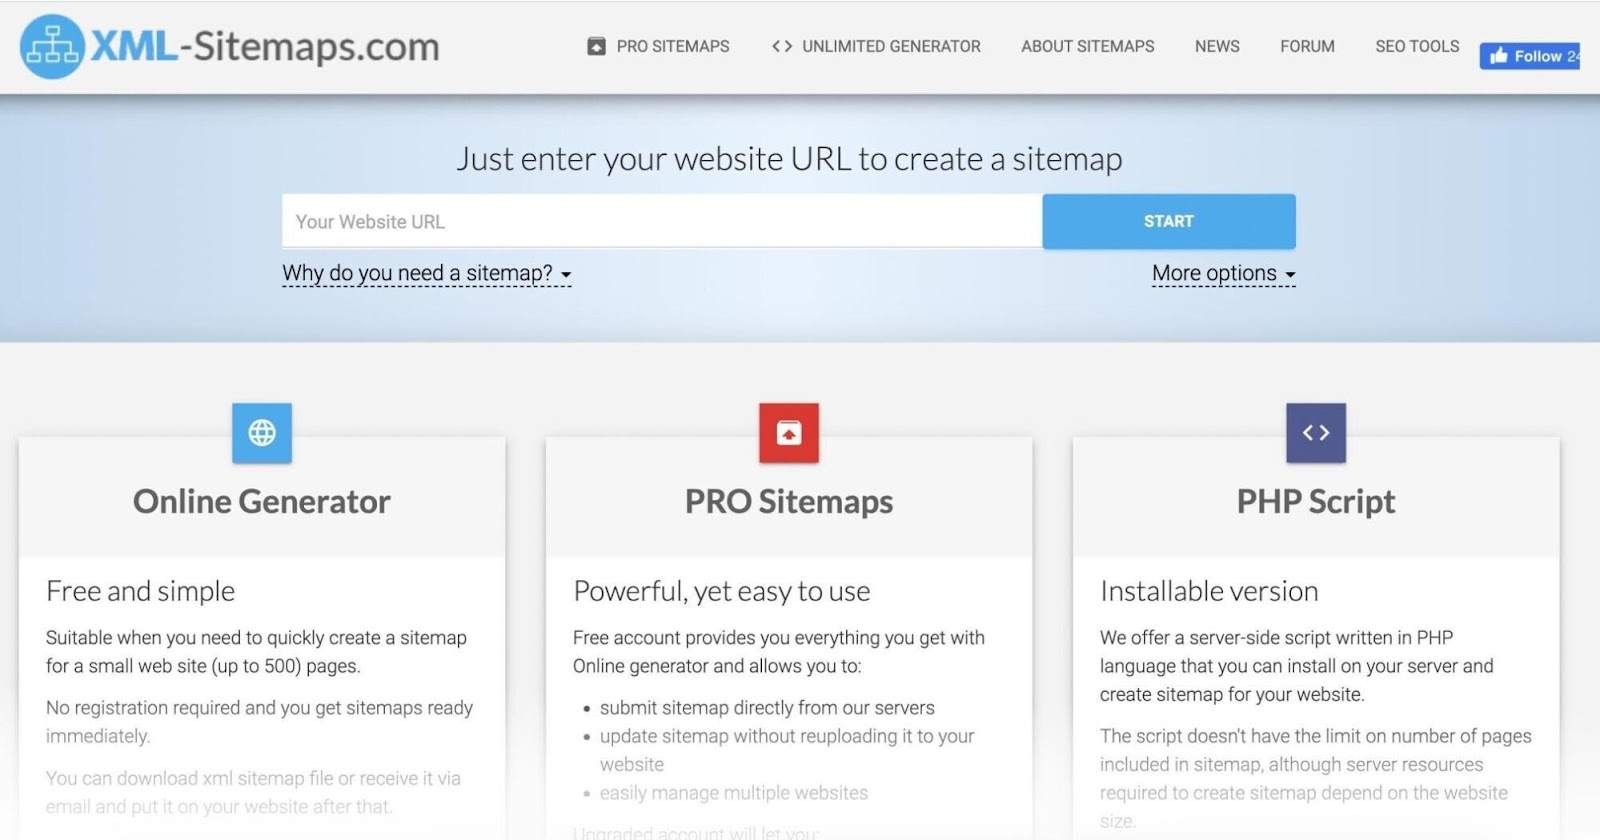 XML Sitemaps.com home page